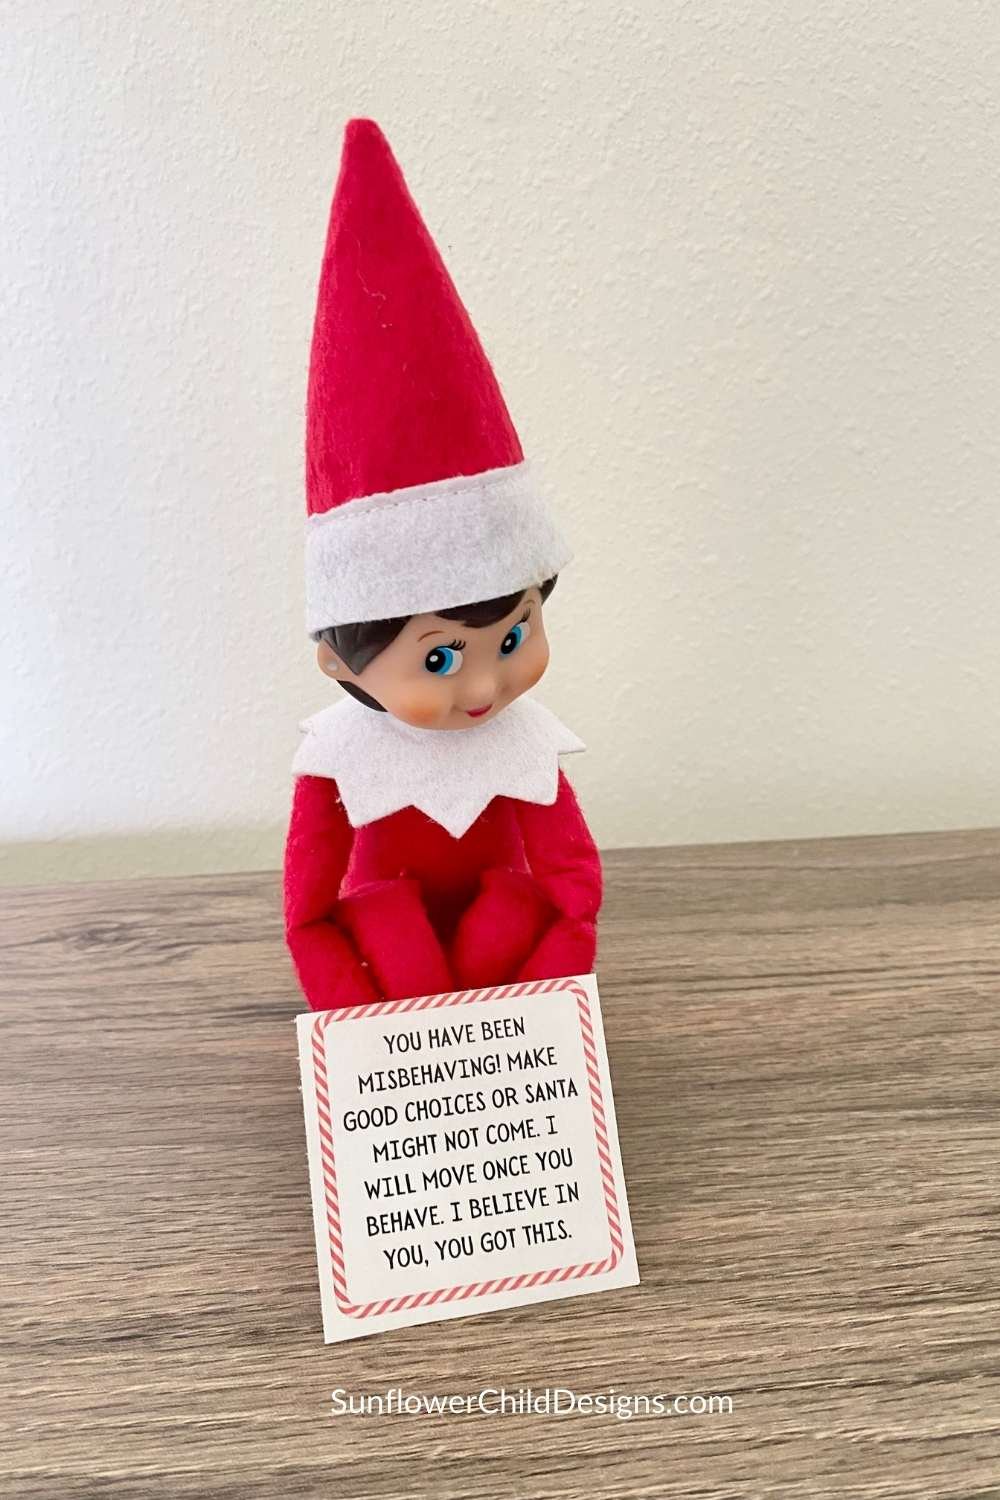 Elf warns of bad behavior